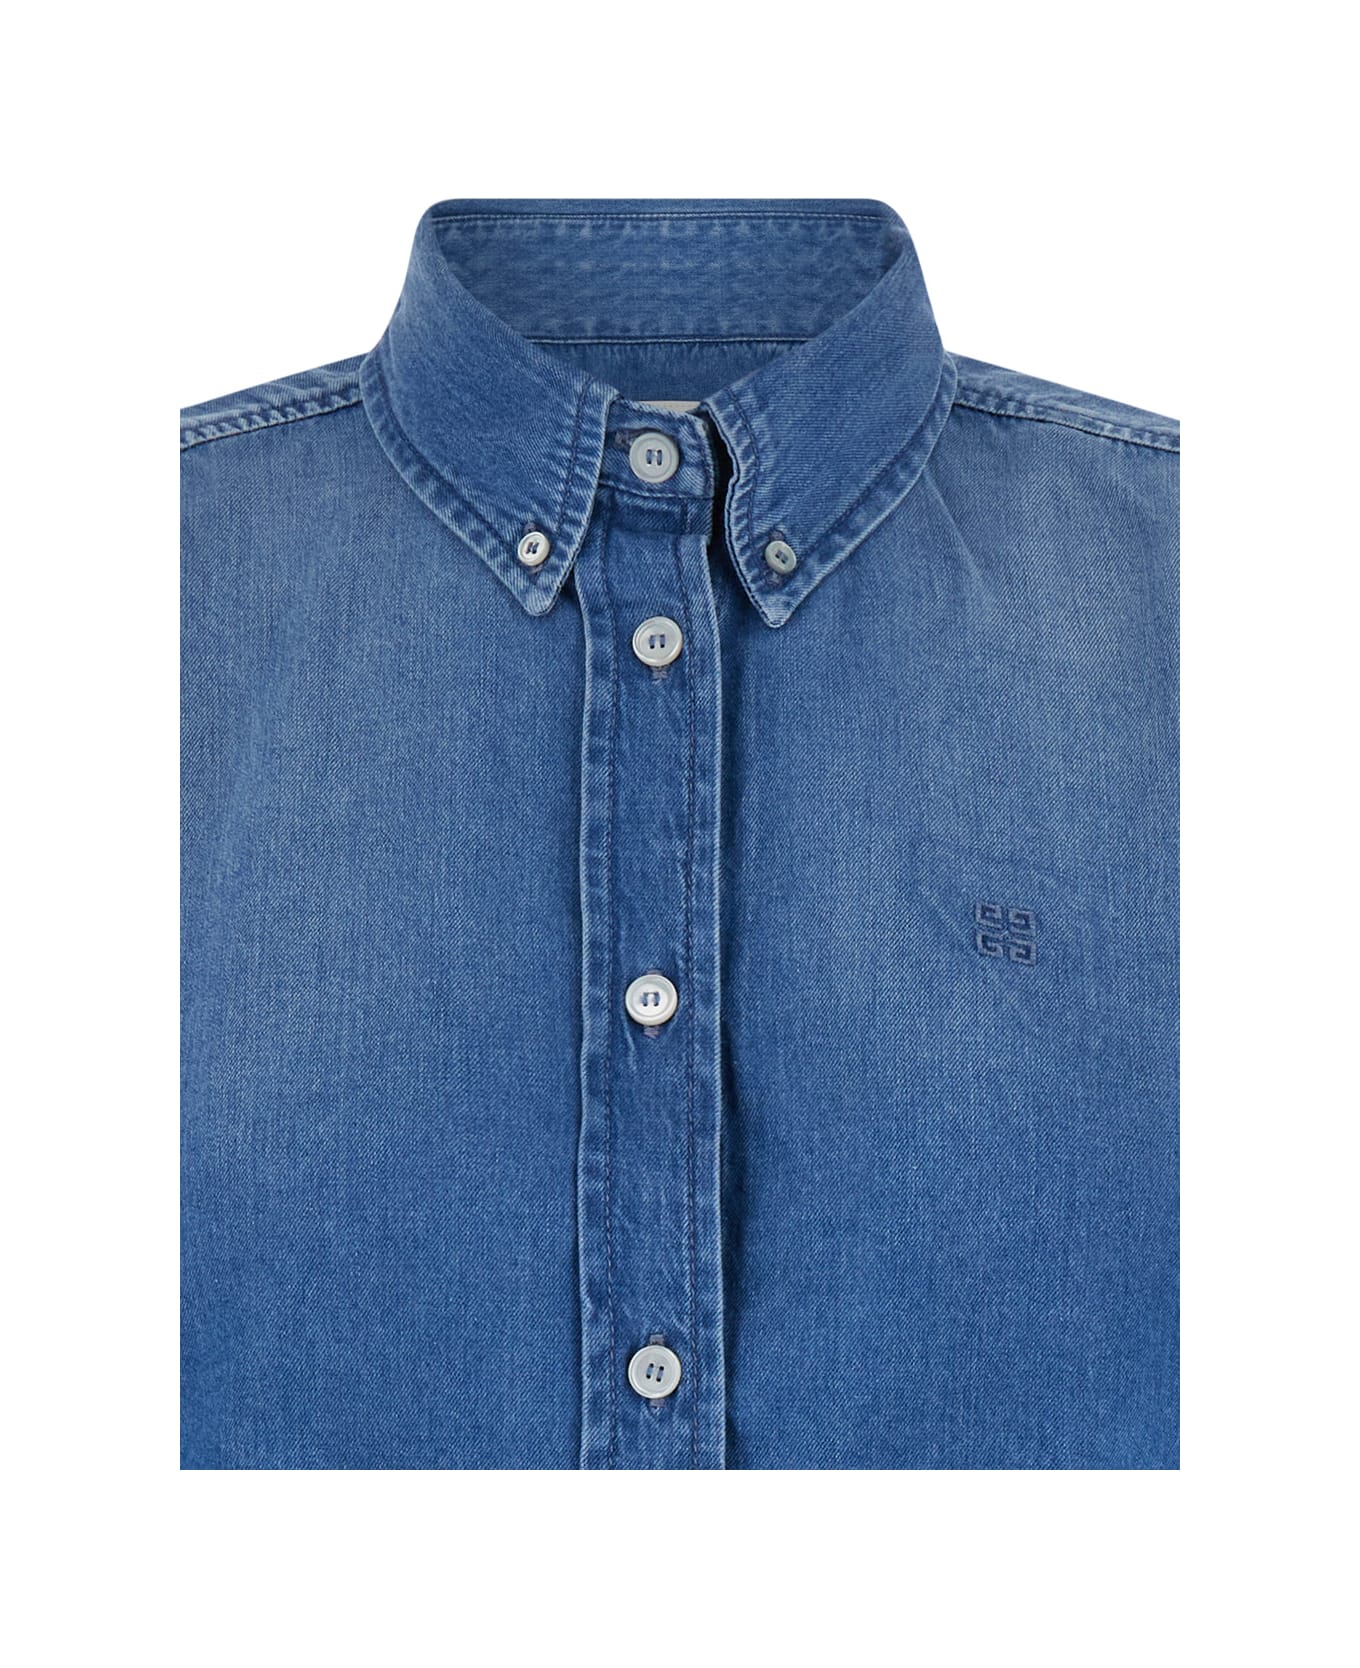 Givenchy Blue Jeans Crop Shirt In Denim Woman - Blu シャツ